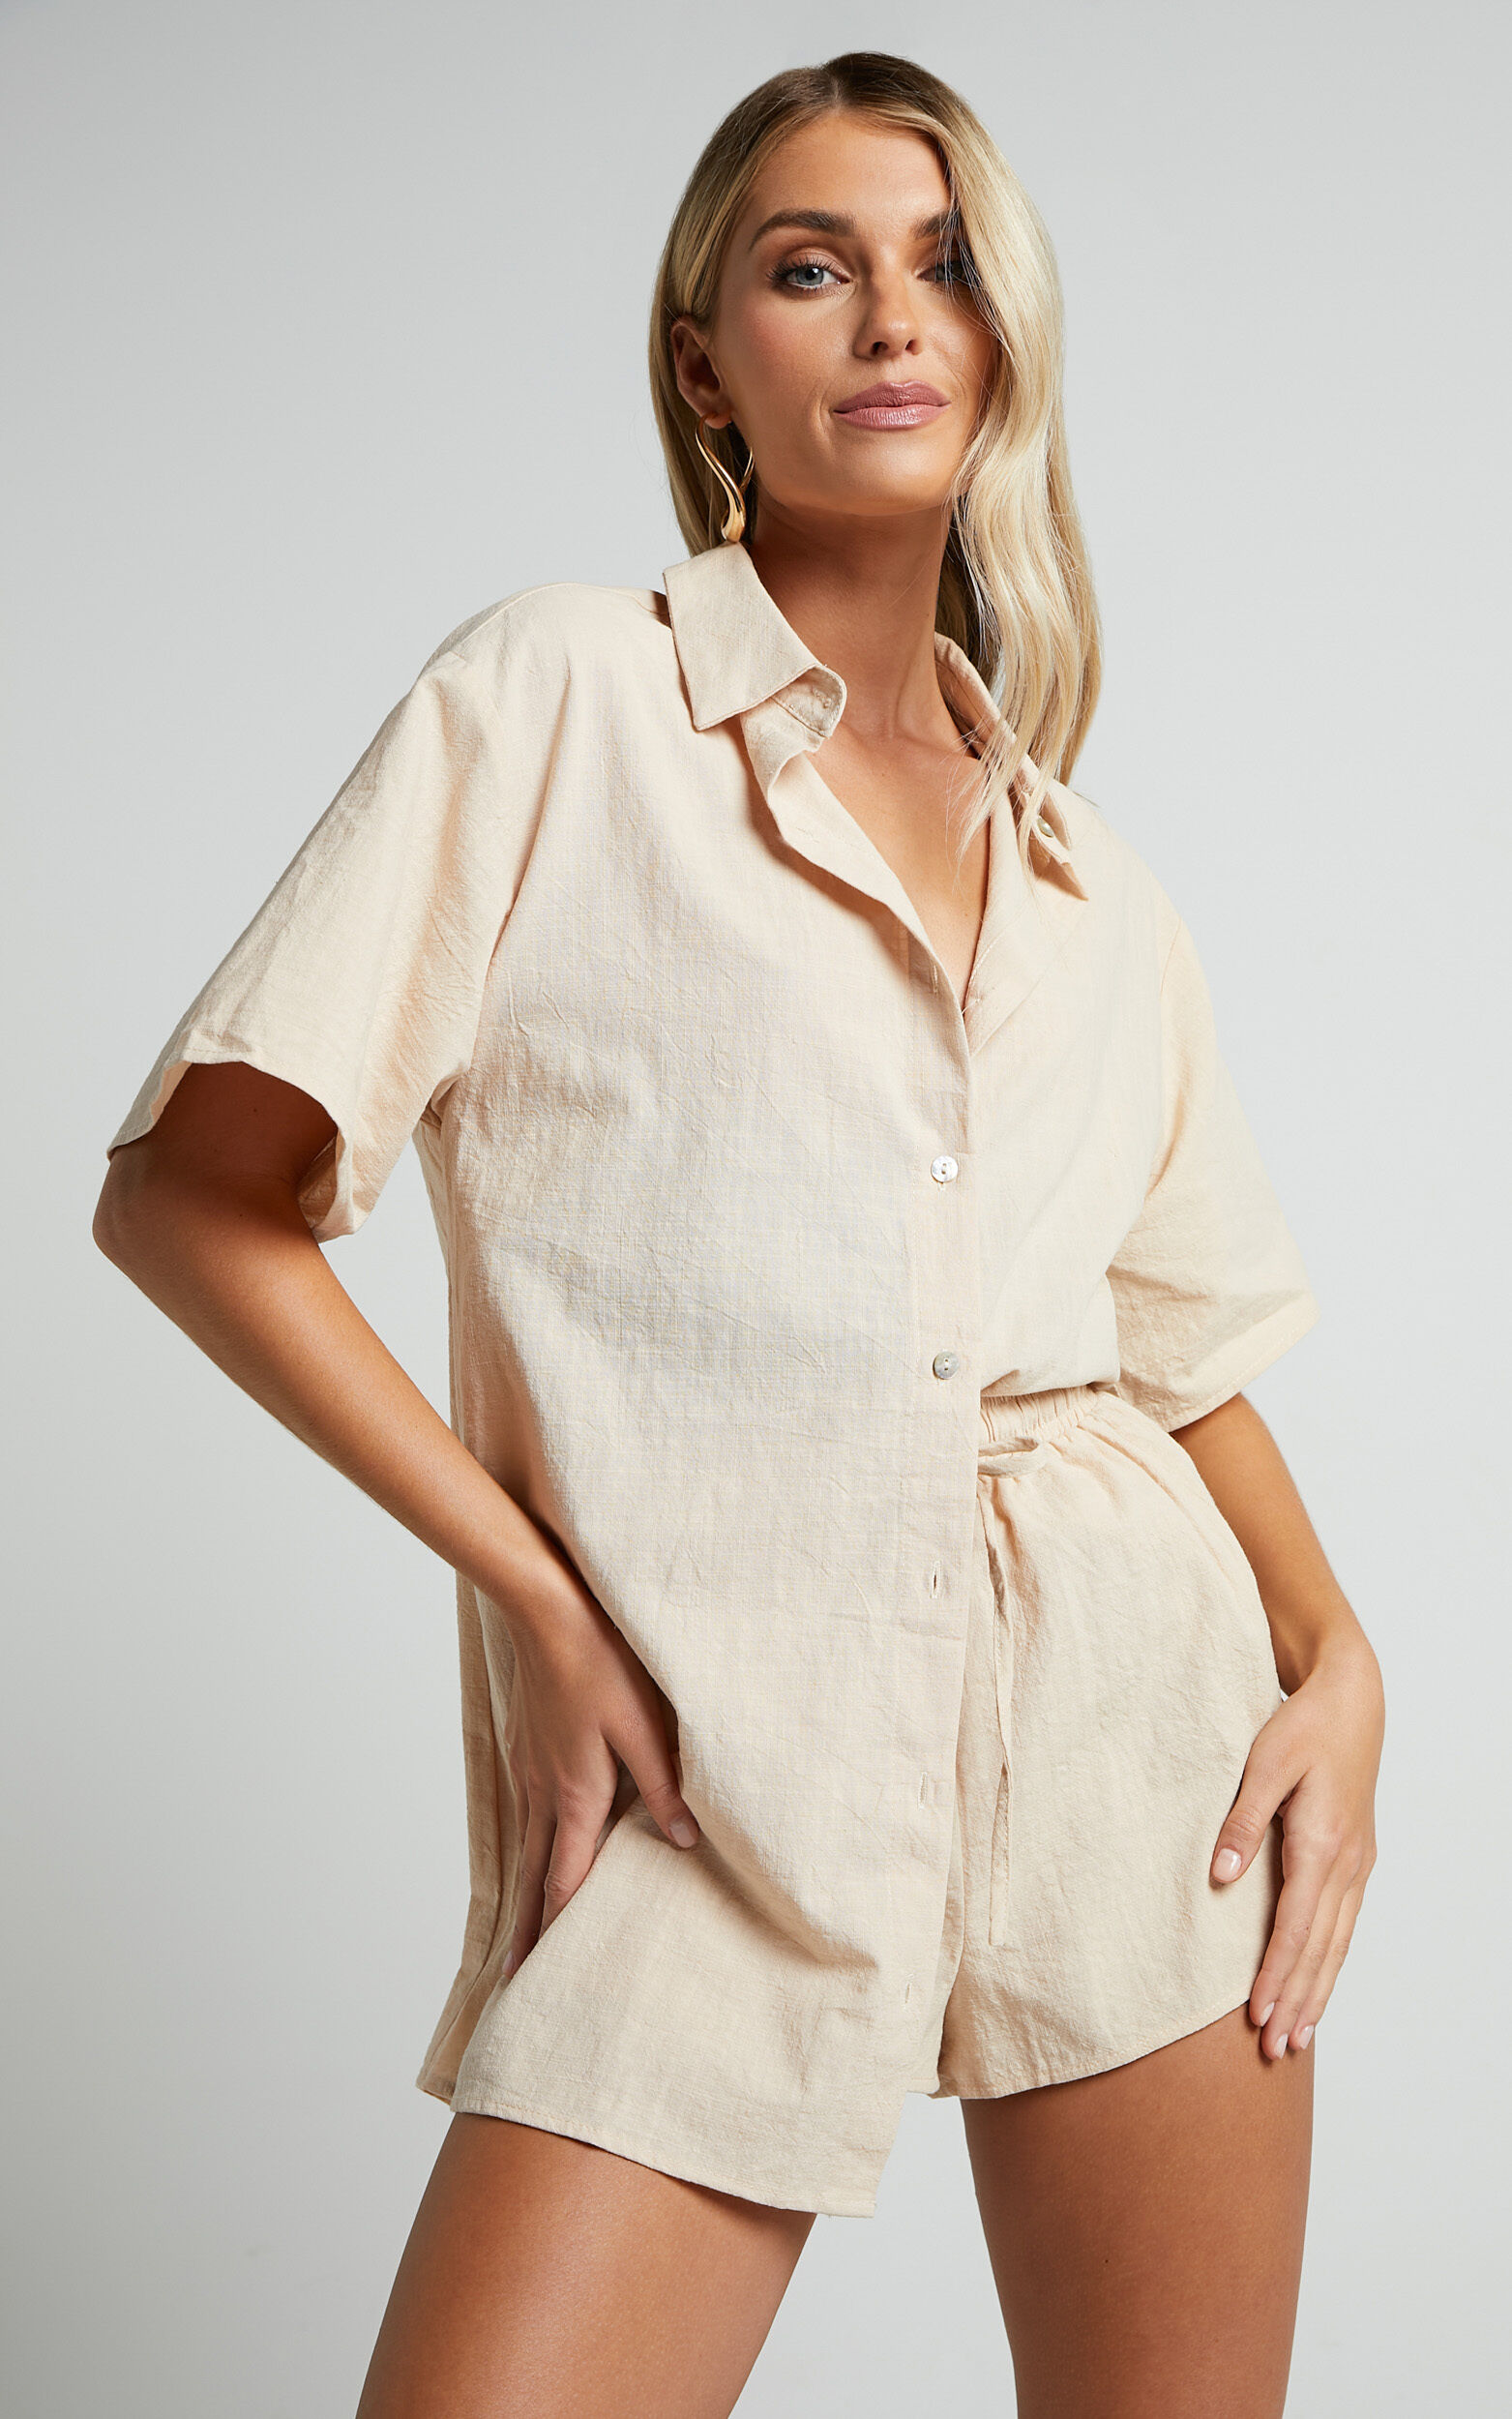 Vina Del Mar Two Piece Set - Linen Look Shirt and Shorts Set in Oatmeal - 04, NEU2